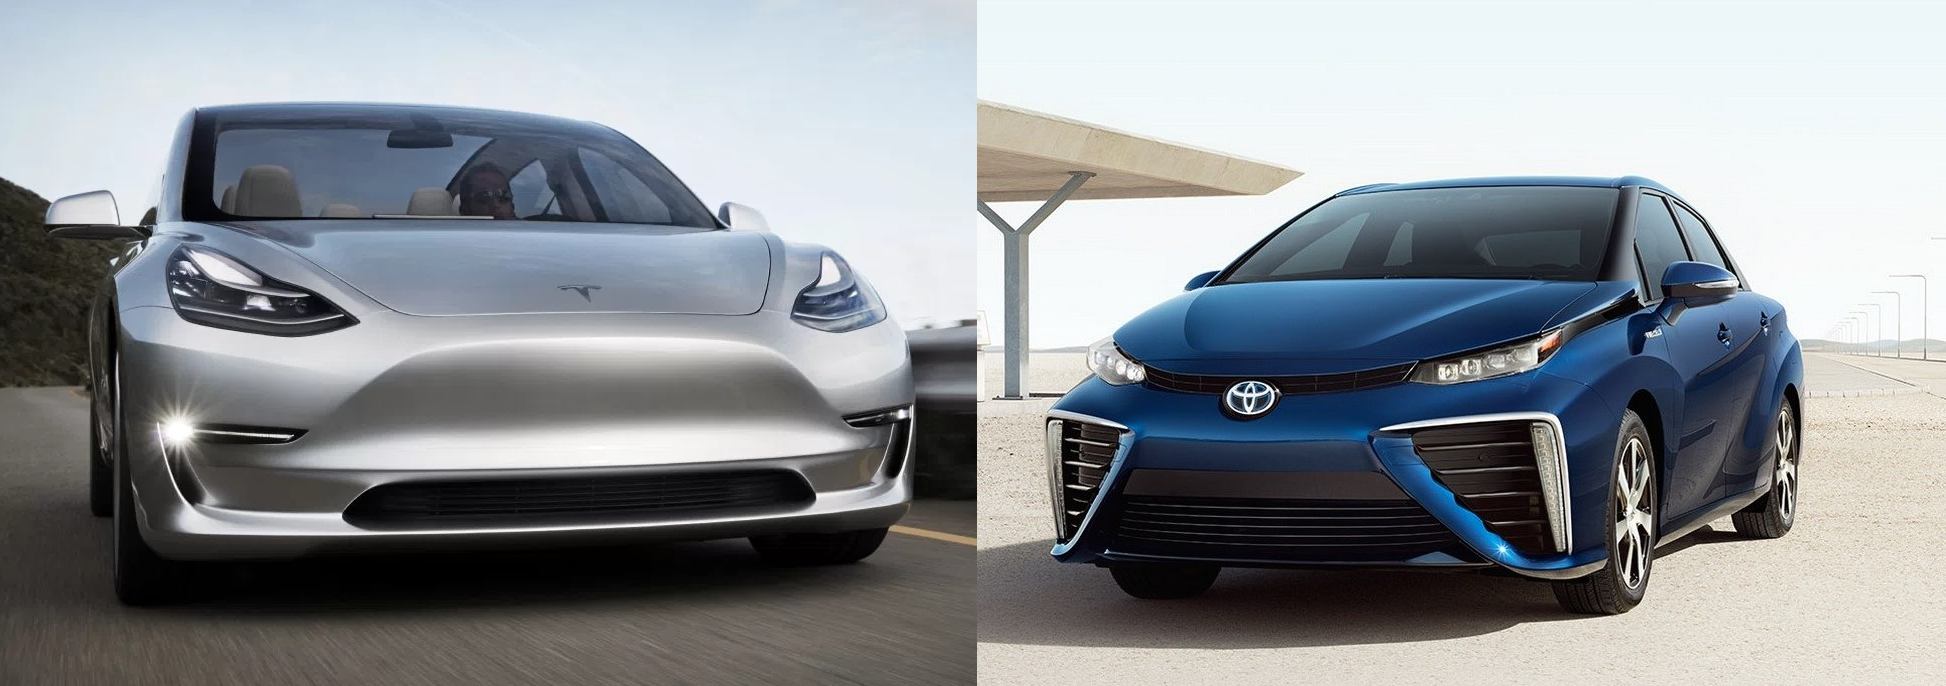 Who is bigger Tesla or Toyota?